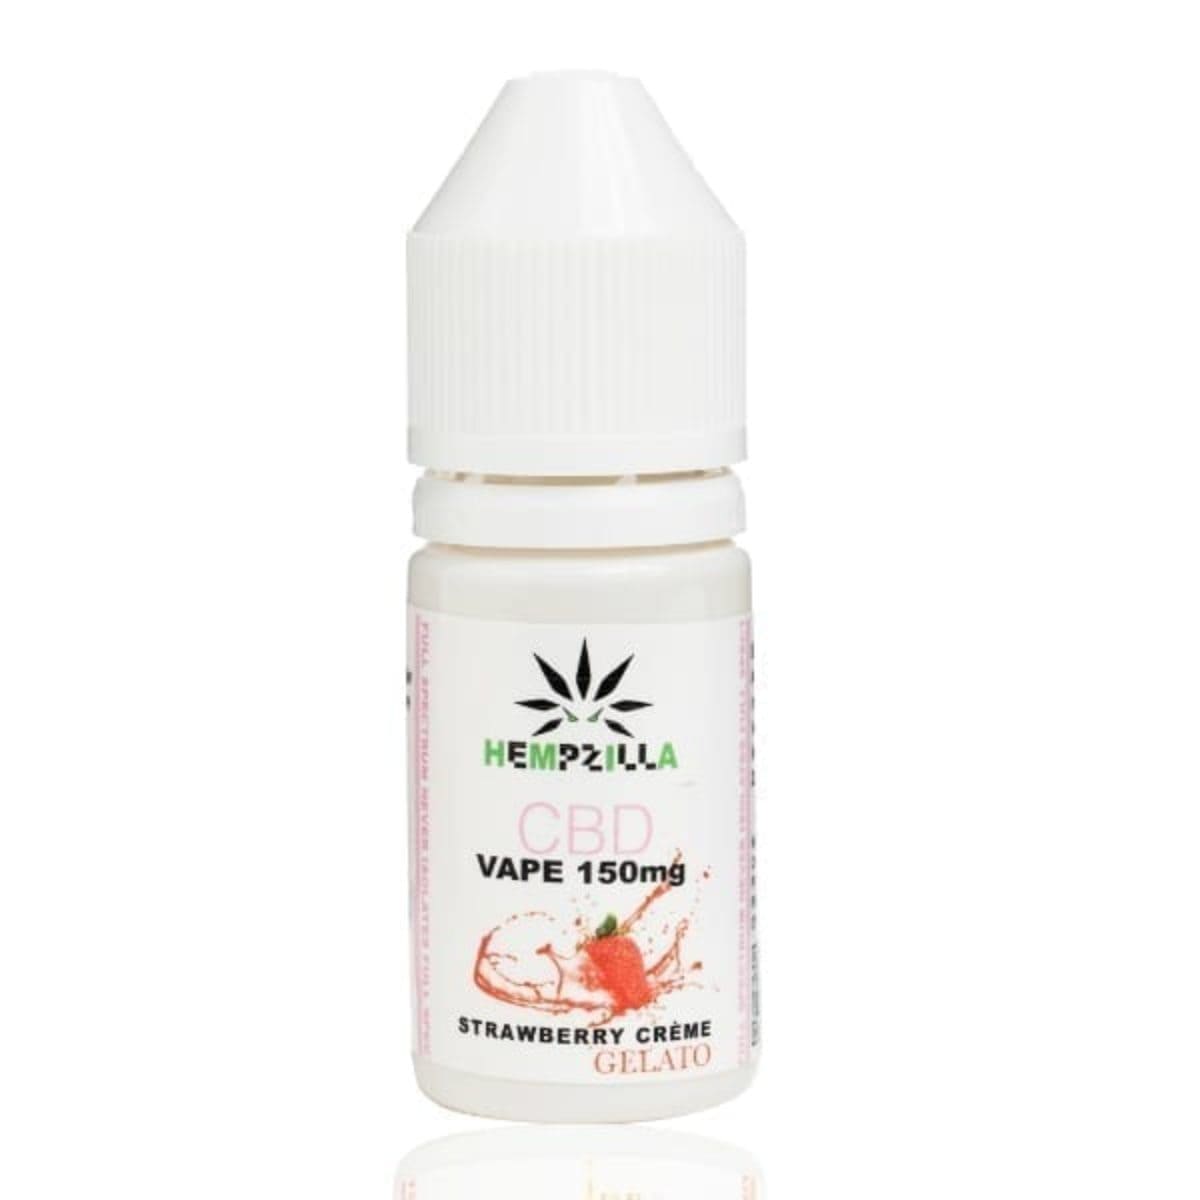 Hempzilla CBD Vape Juice 30ml - 150mg - Strawberry Creme Gelato image1